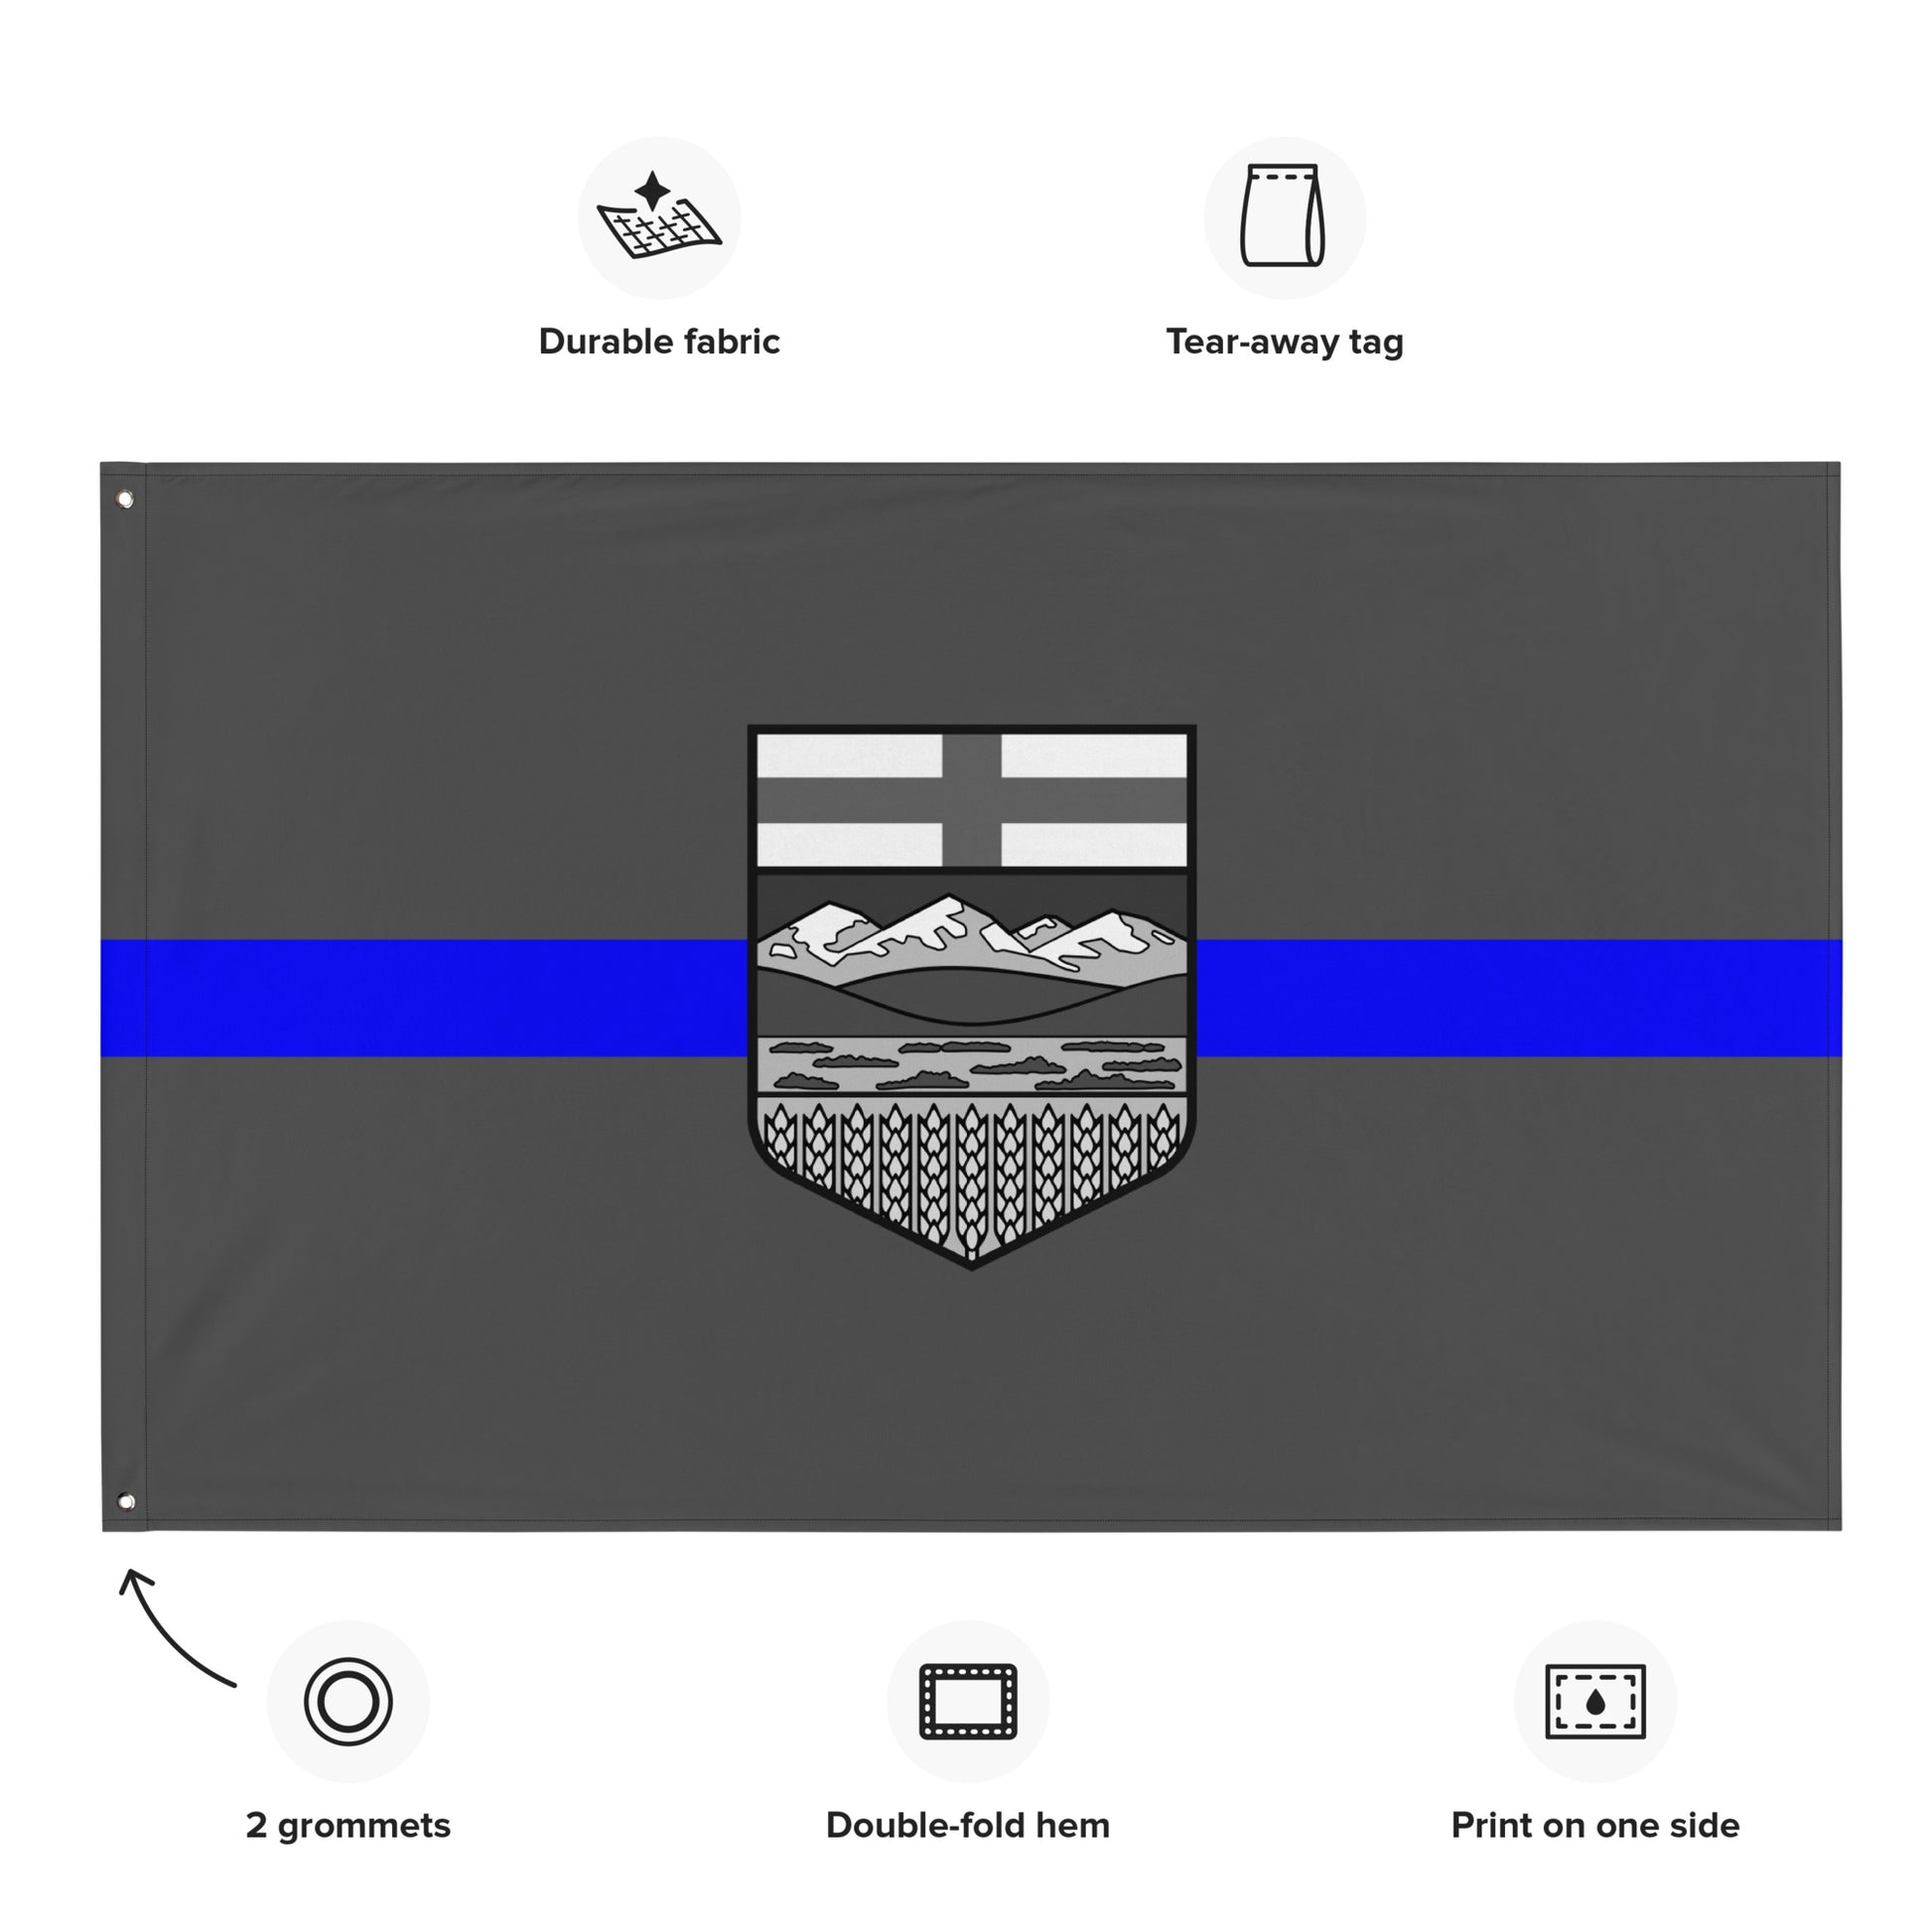 Subdued Alberta Thin Blue Line Canada Wall Flag-911 Duty Gear Canada-911 Duty Gear Canada